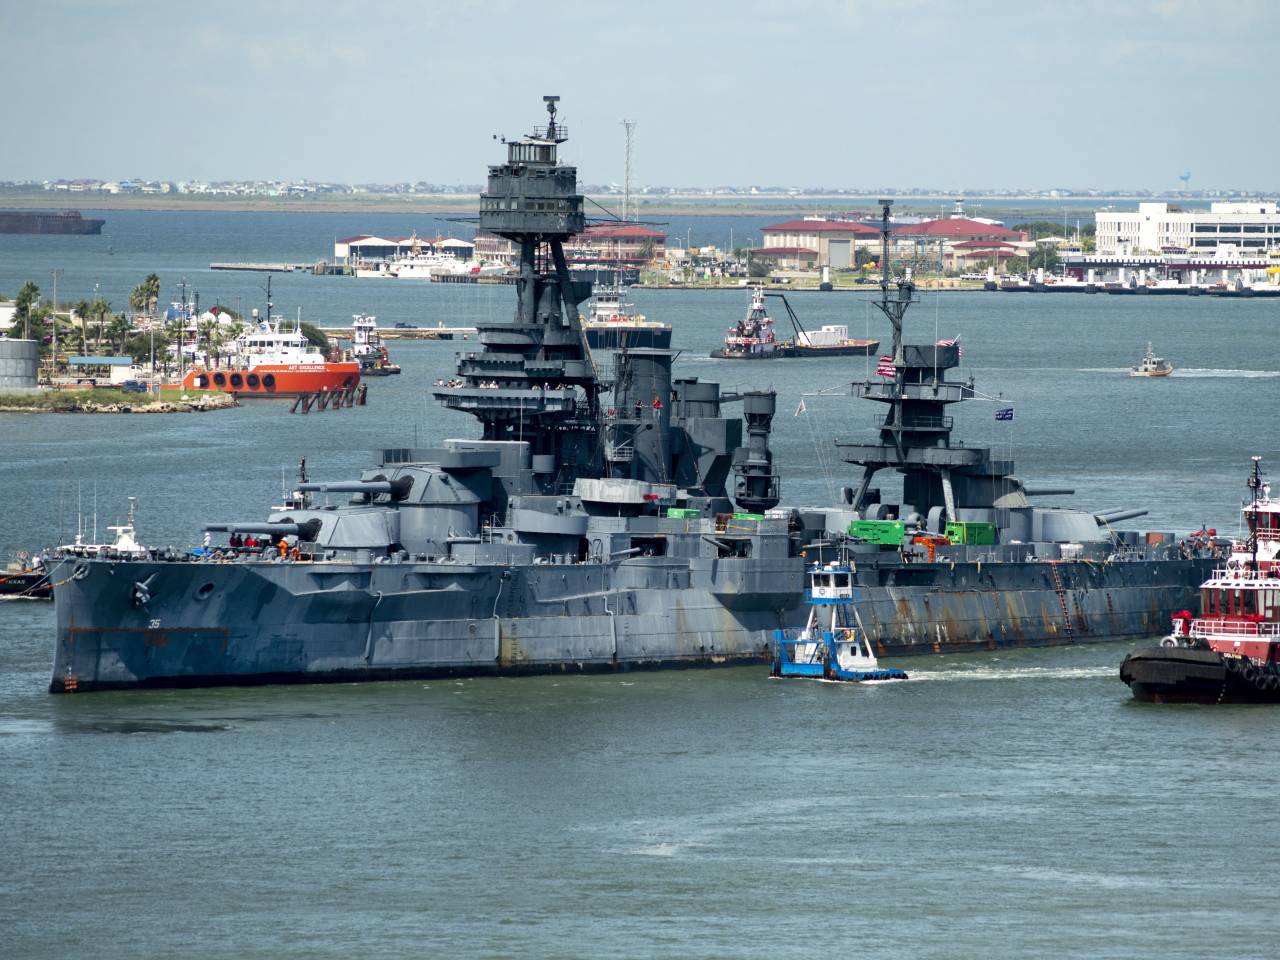 View of uss texas battleship dry docked in Galveston Texas